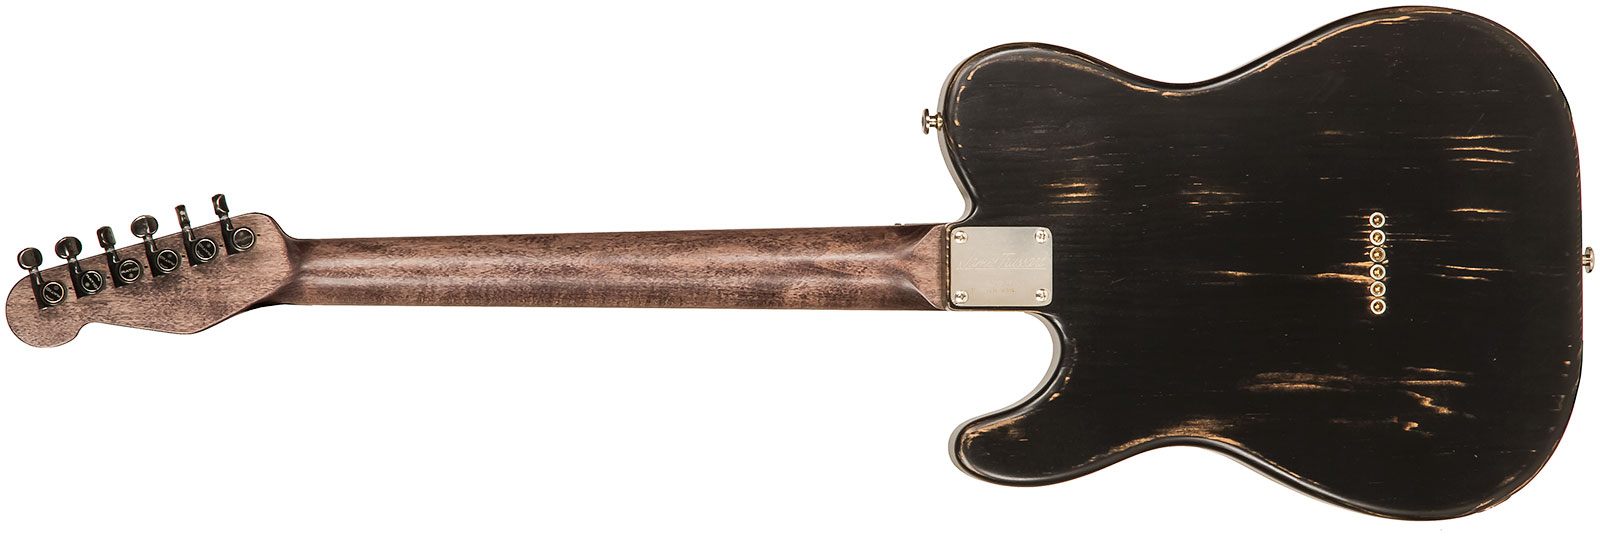 James Trussart Steeltopcaster Sh Ht Eb #21135 - Antique Silver Paisley - E-Gitarre in Teleform - Variation 1